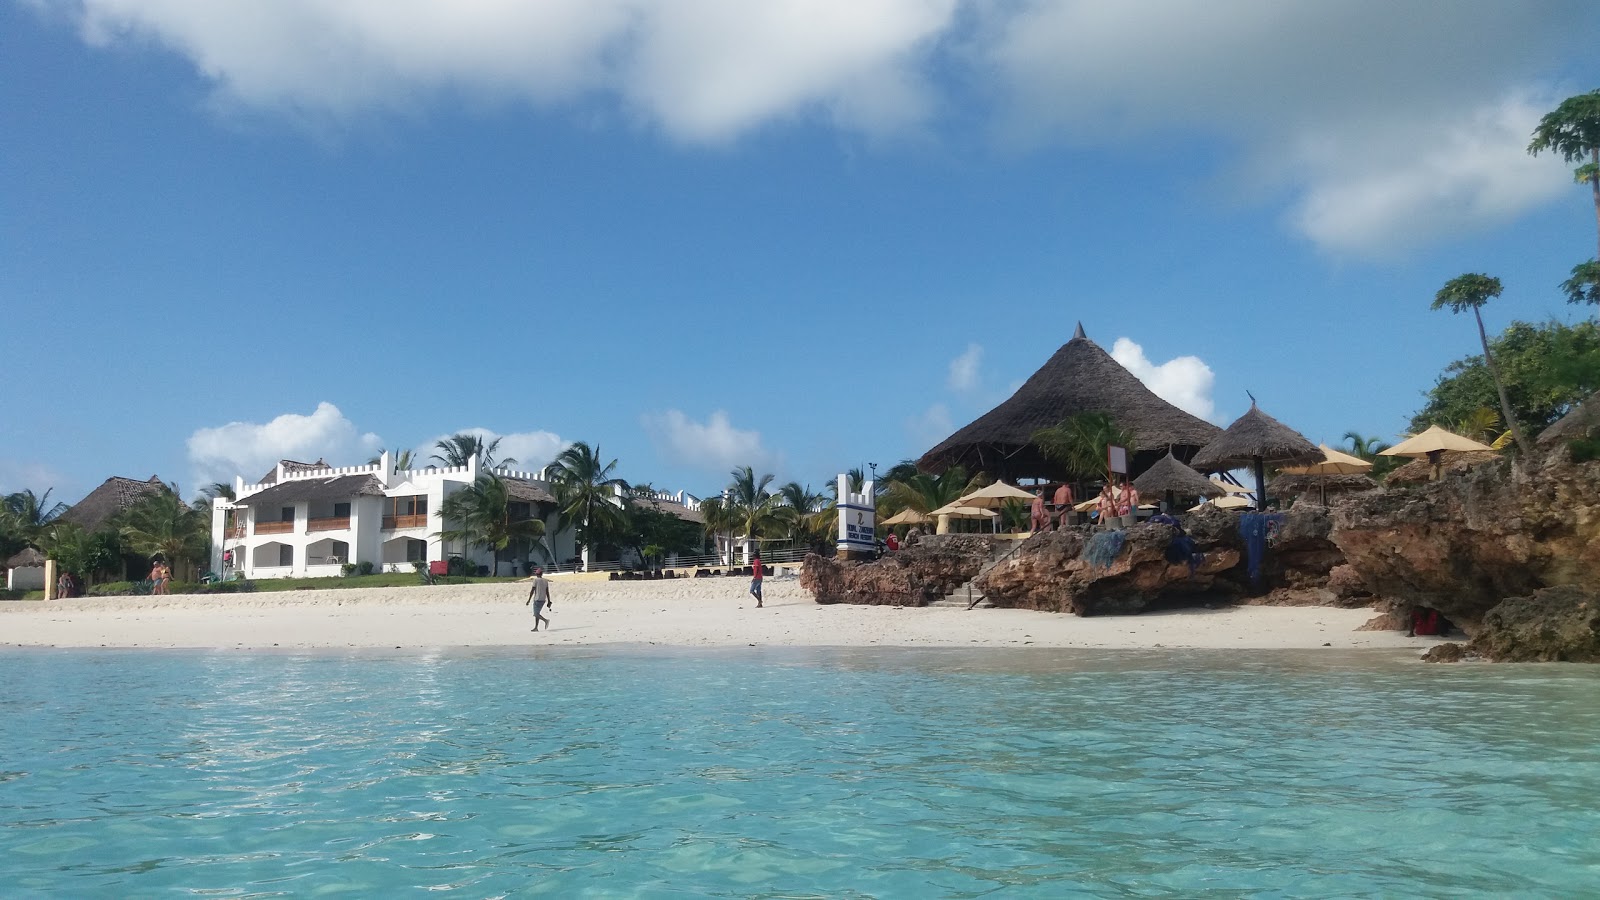 Foto de Royal Beach - lugar popular entre os apreciadores de relaxamento